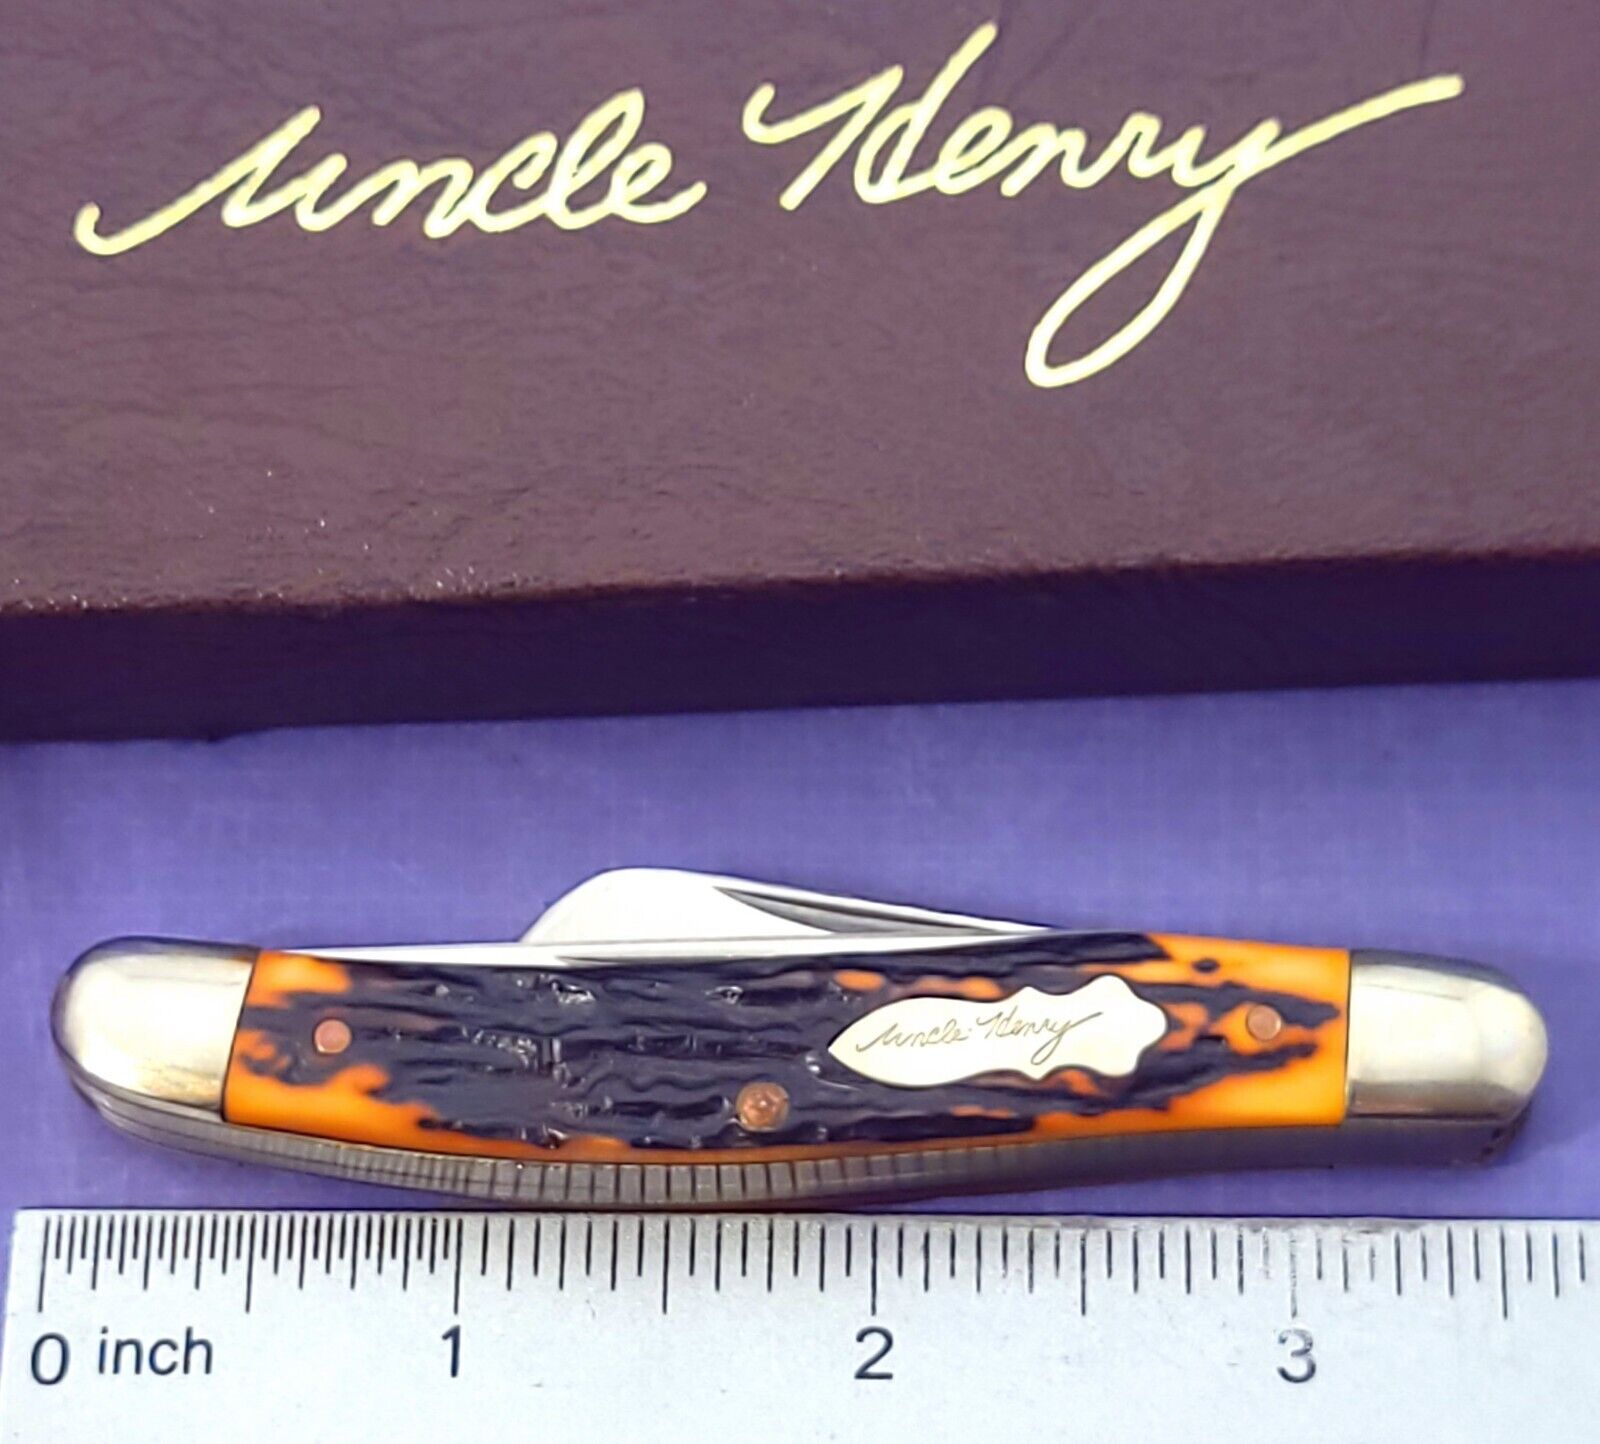 Schrade Walden Uncle Henry Knife Made in USA 1946-73 897UH Medum Stockman NOS